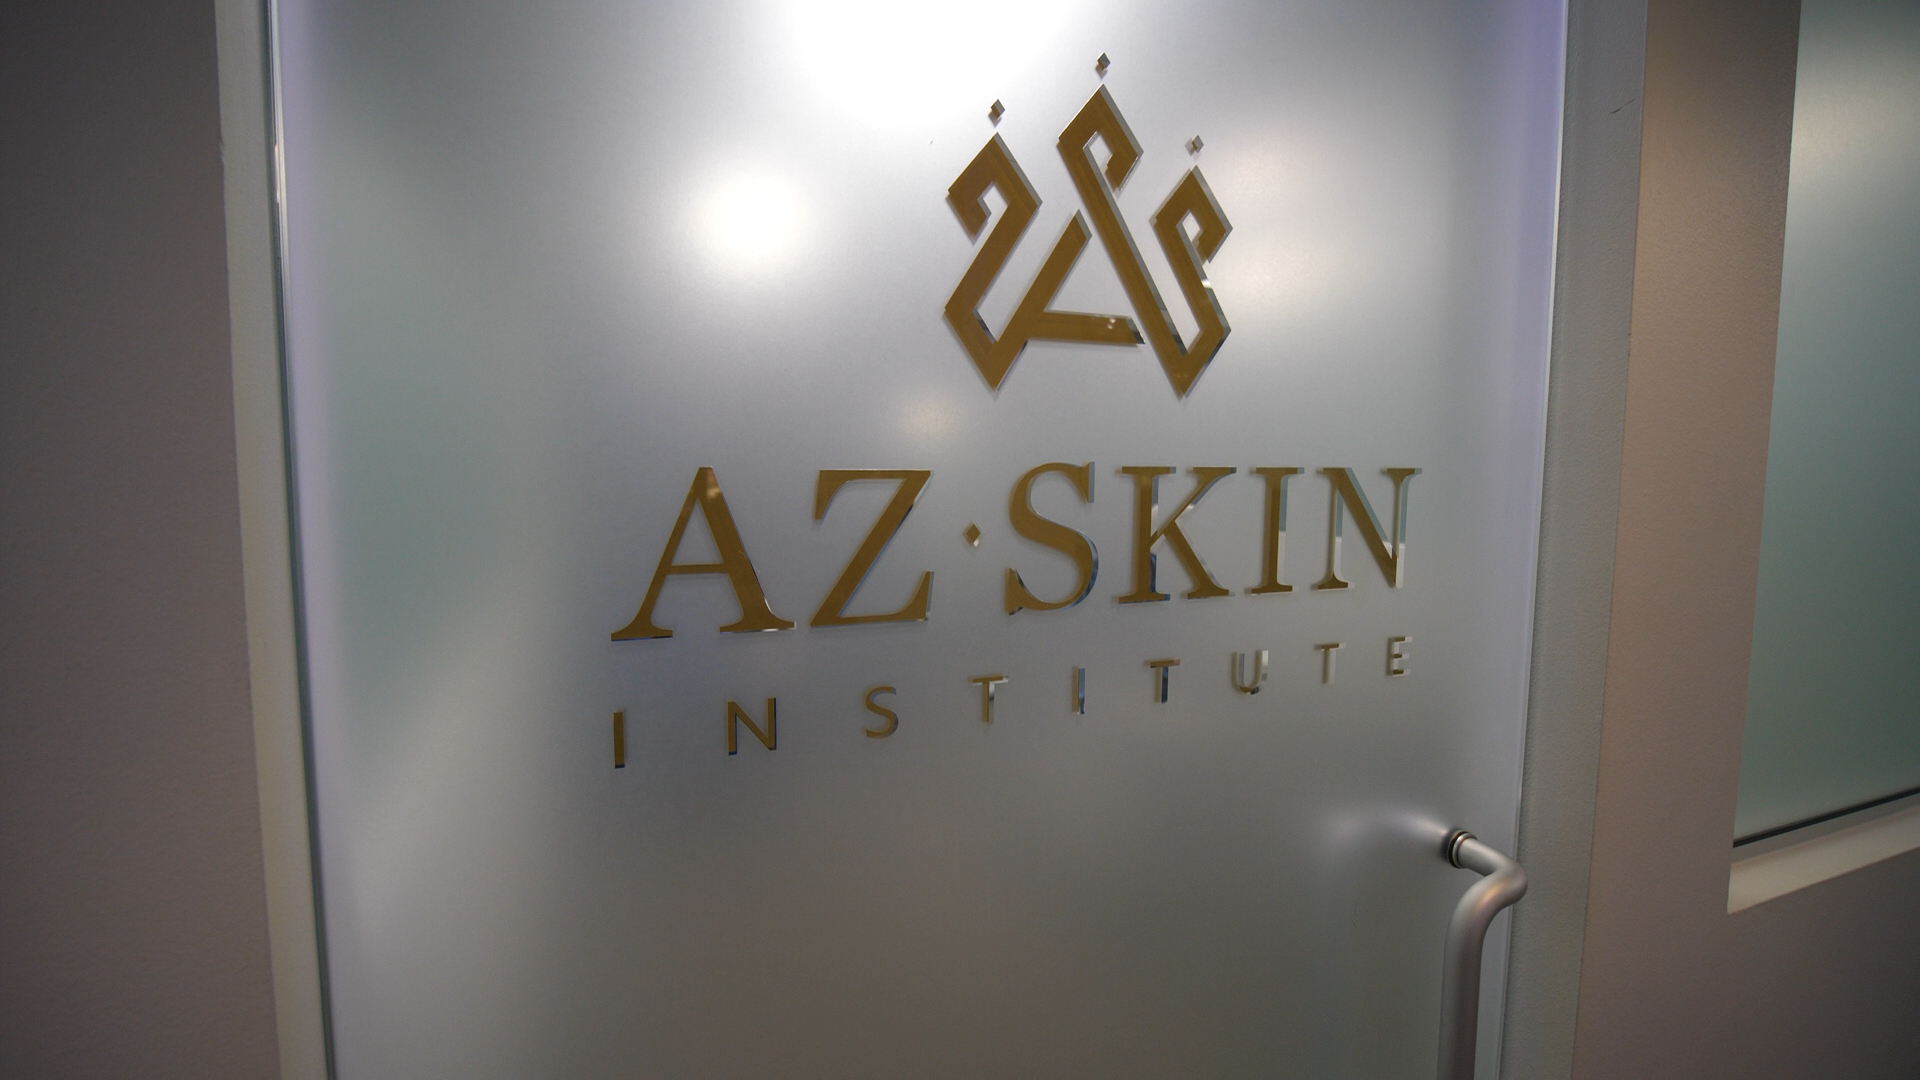 See the Magic of AZ Skin Institute